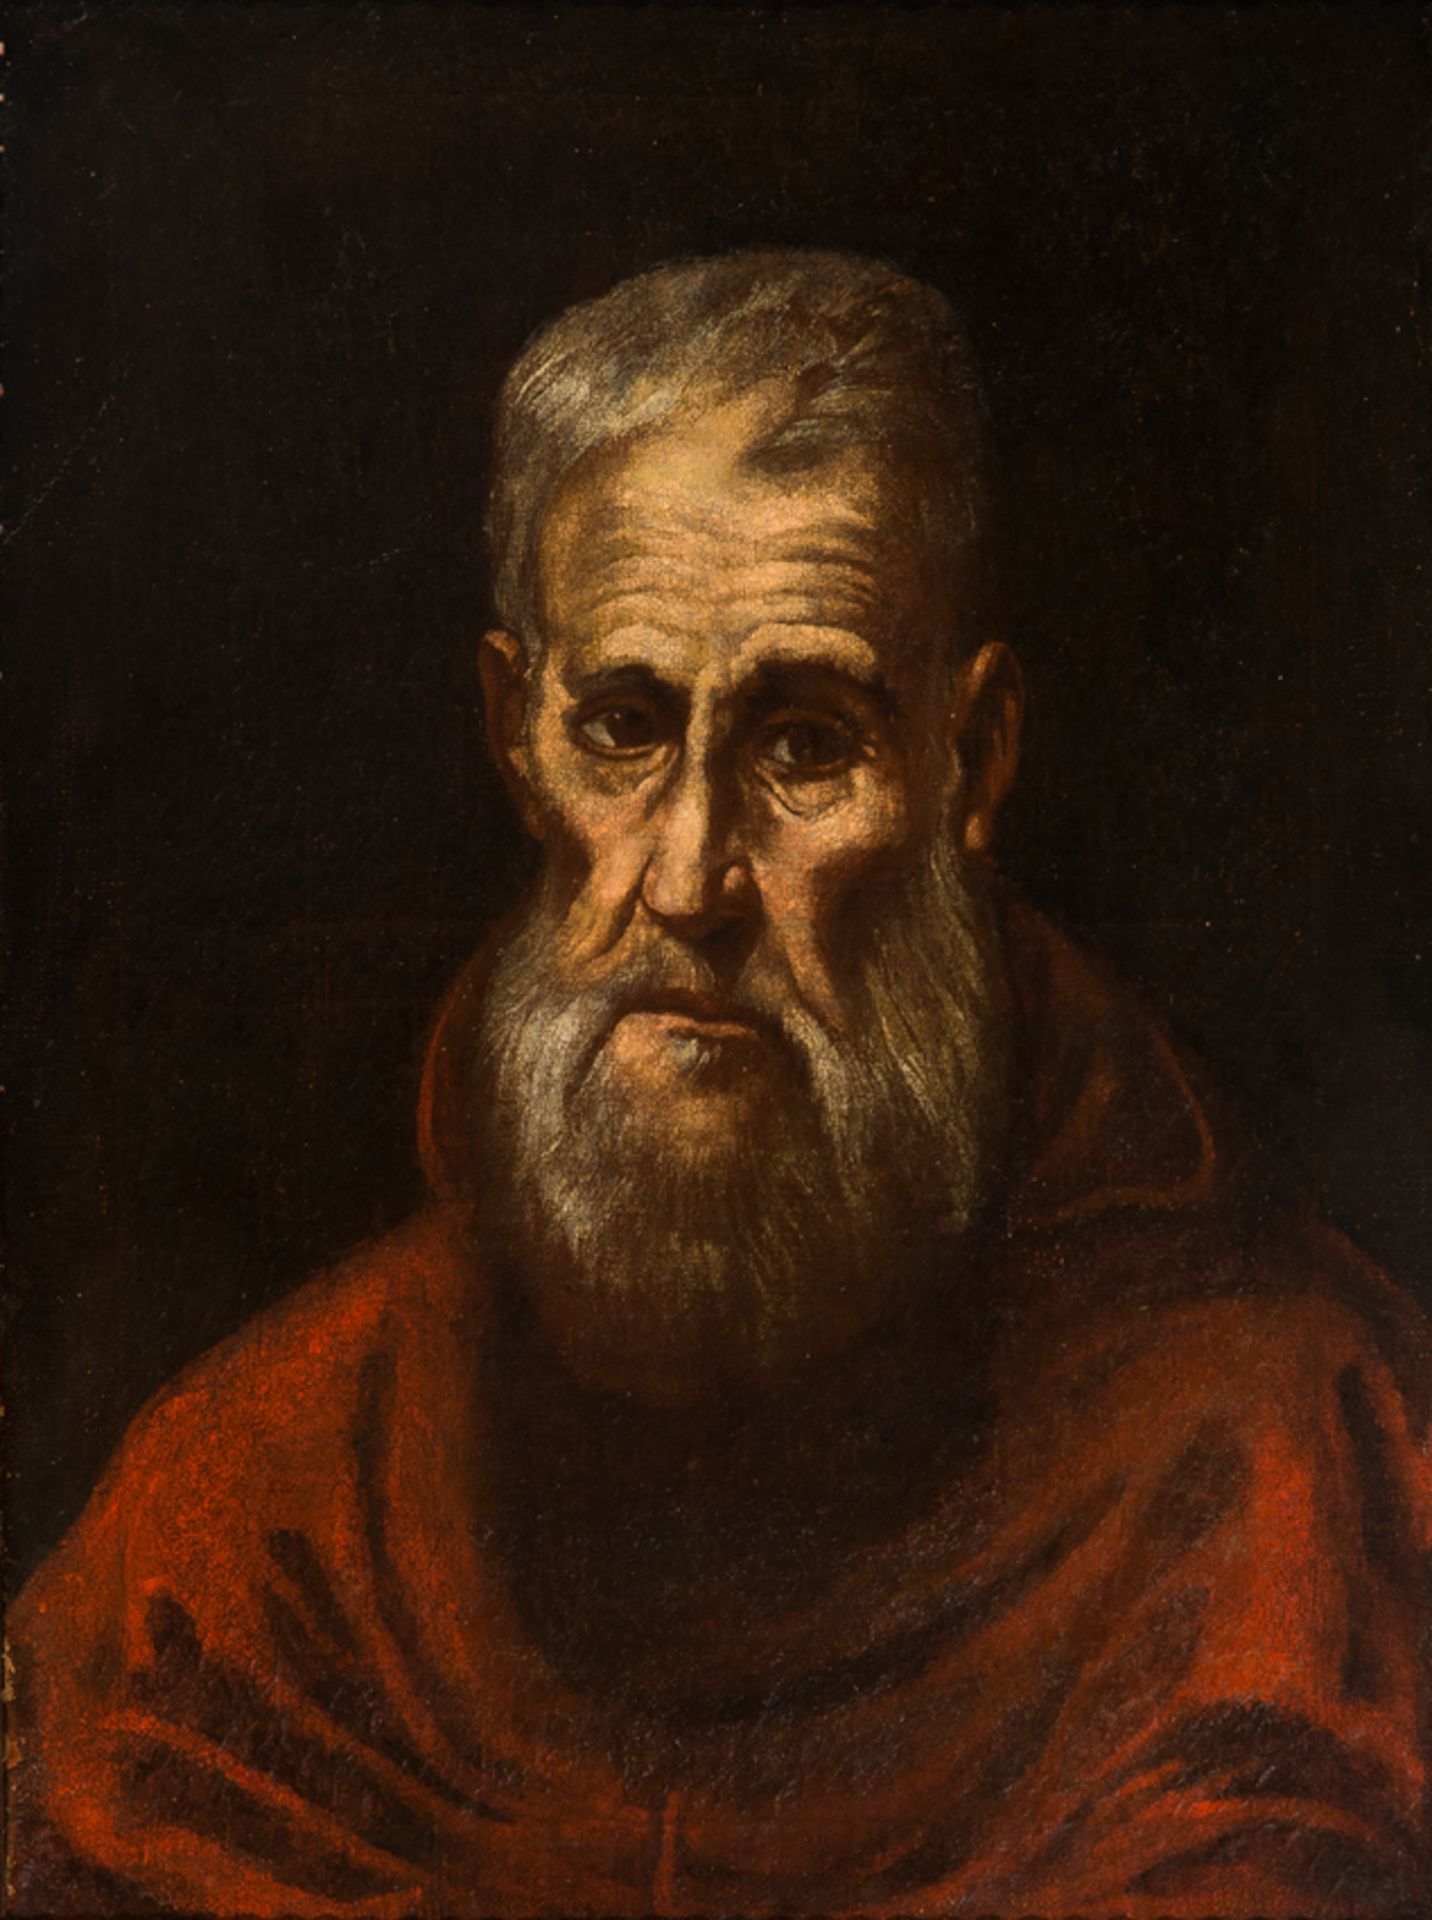 El Greco workshop (Crete, 1541 - Toledo, 1614)